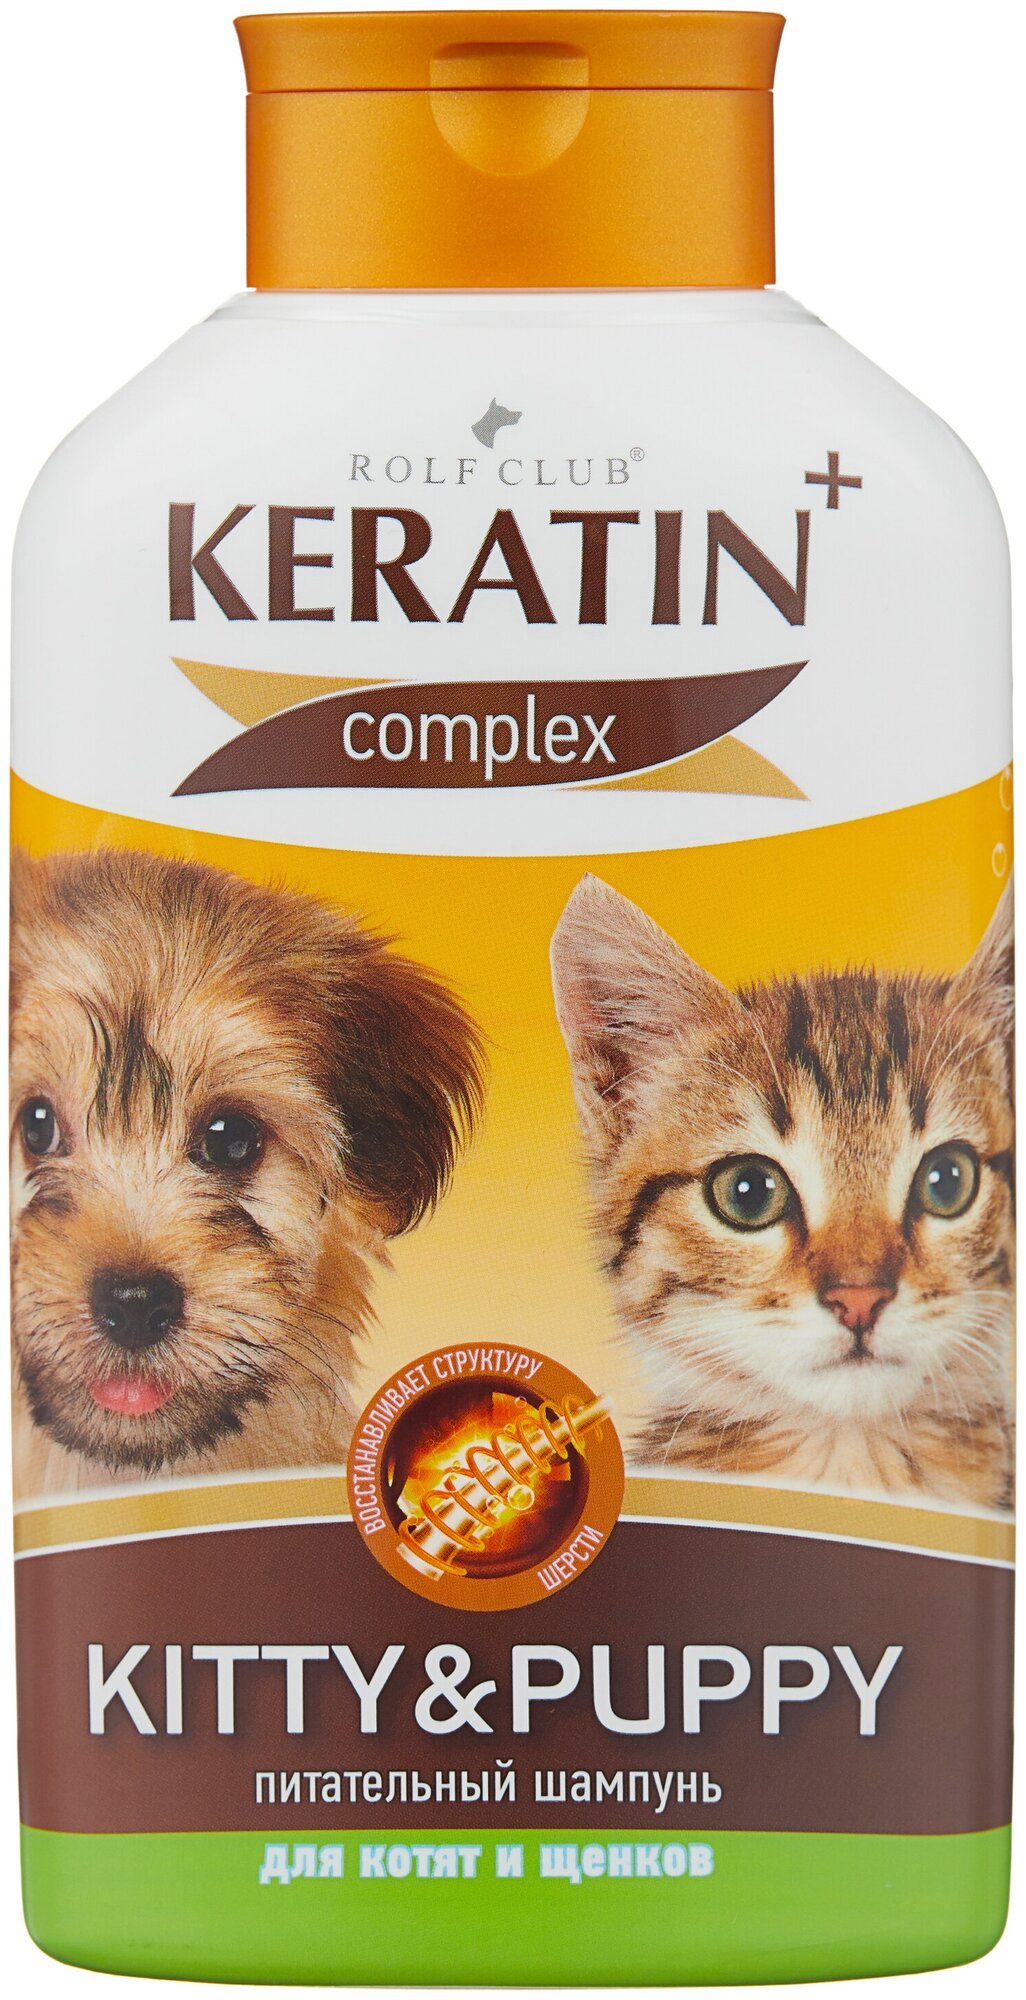 Шампунь для котят и щенков, RolfClub KERATIN+ Kitty&Puppy, 400мл